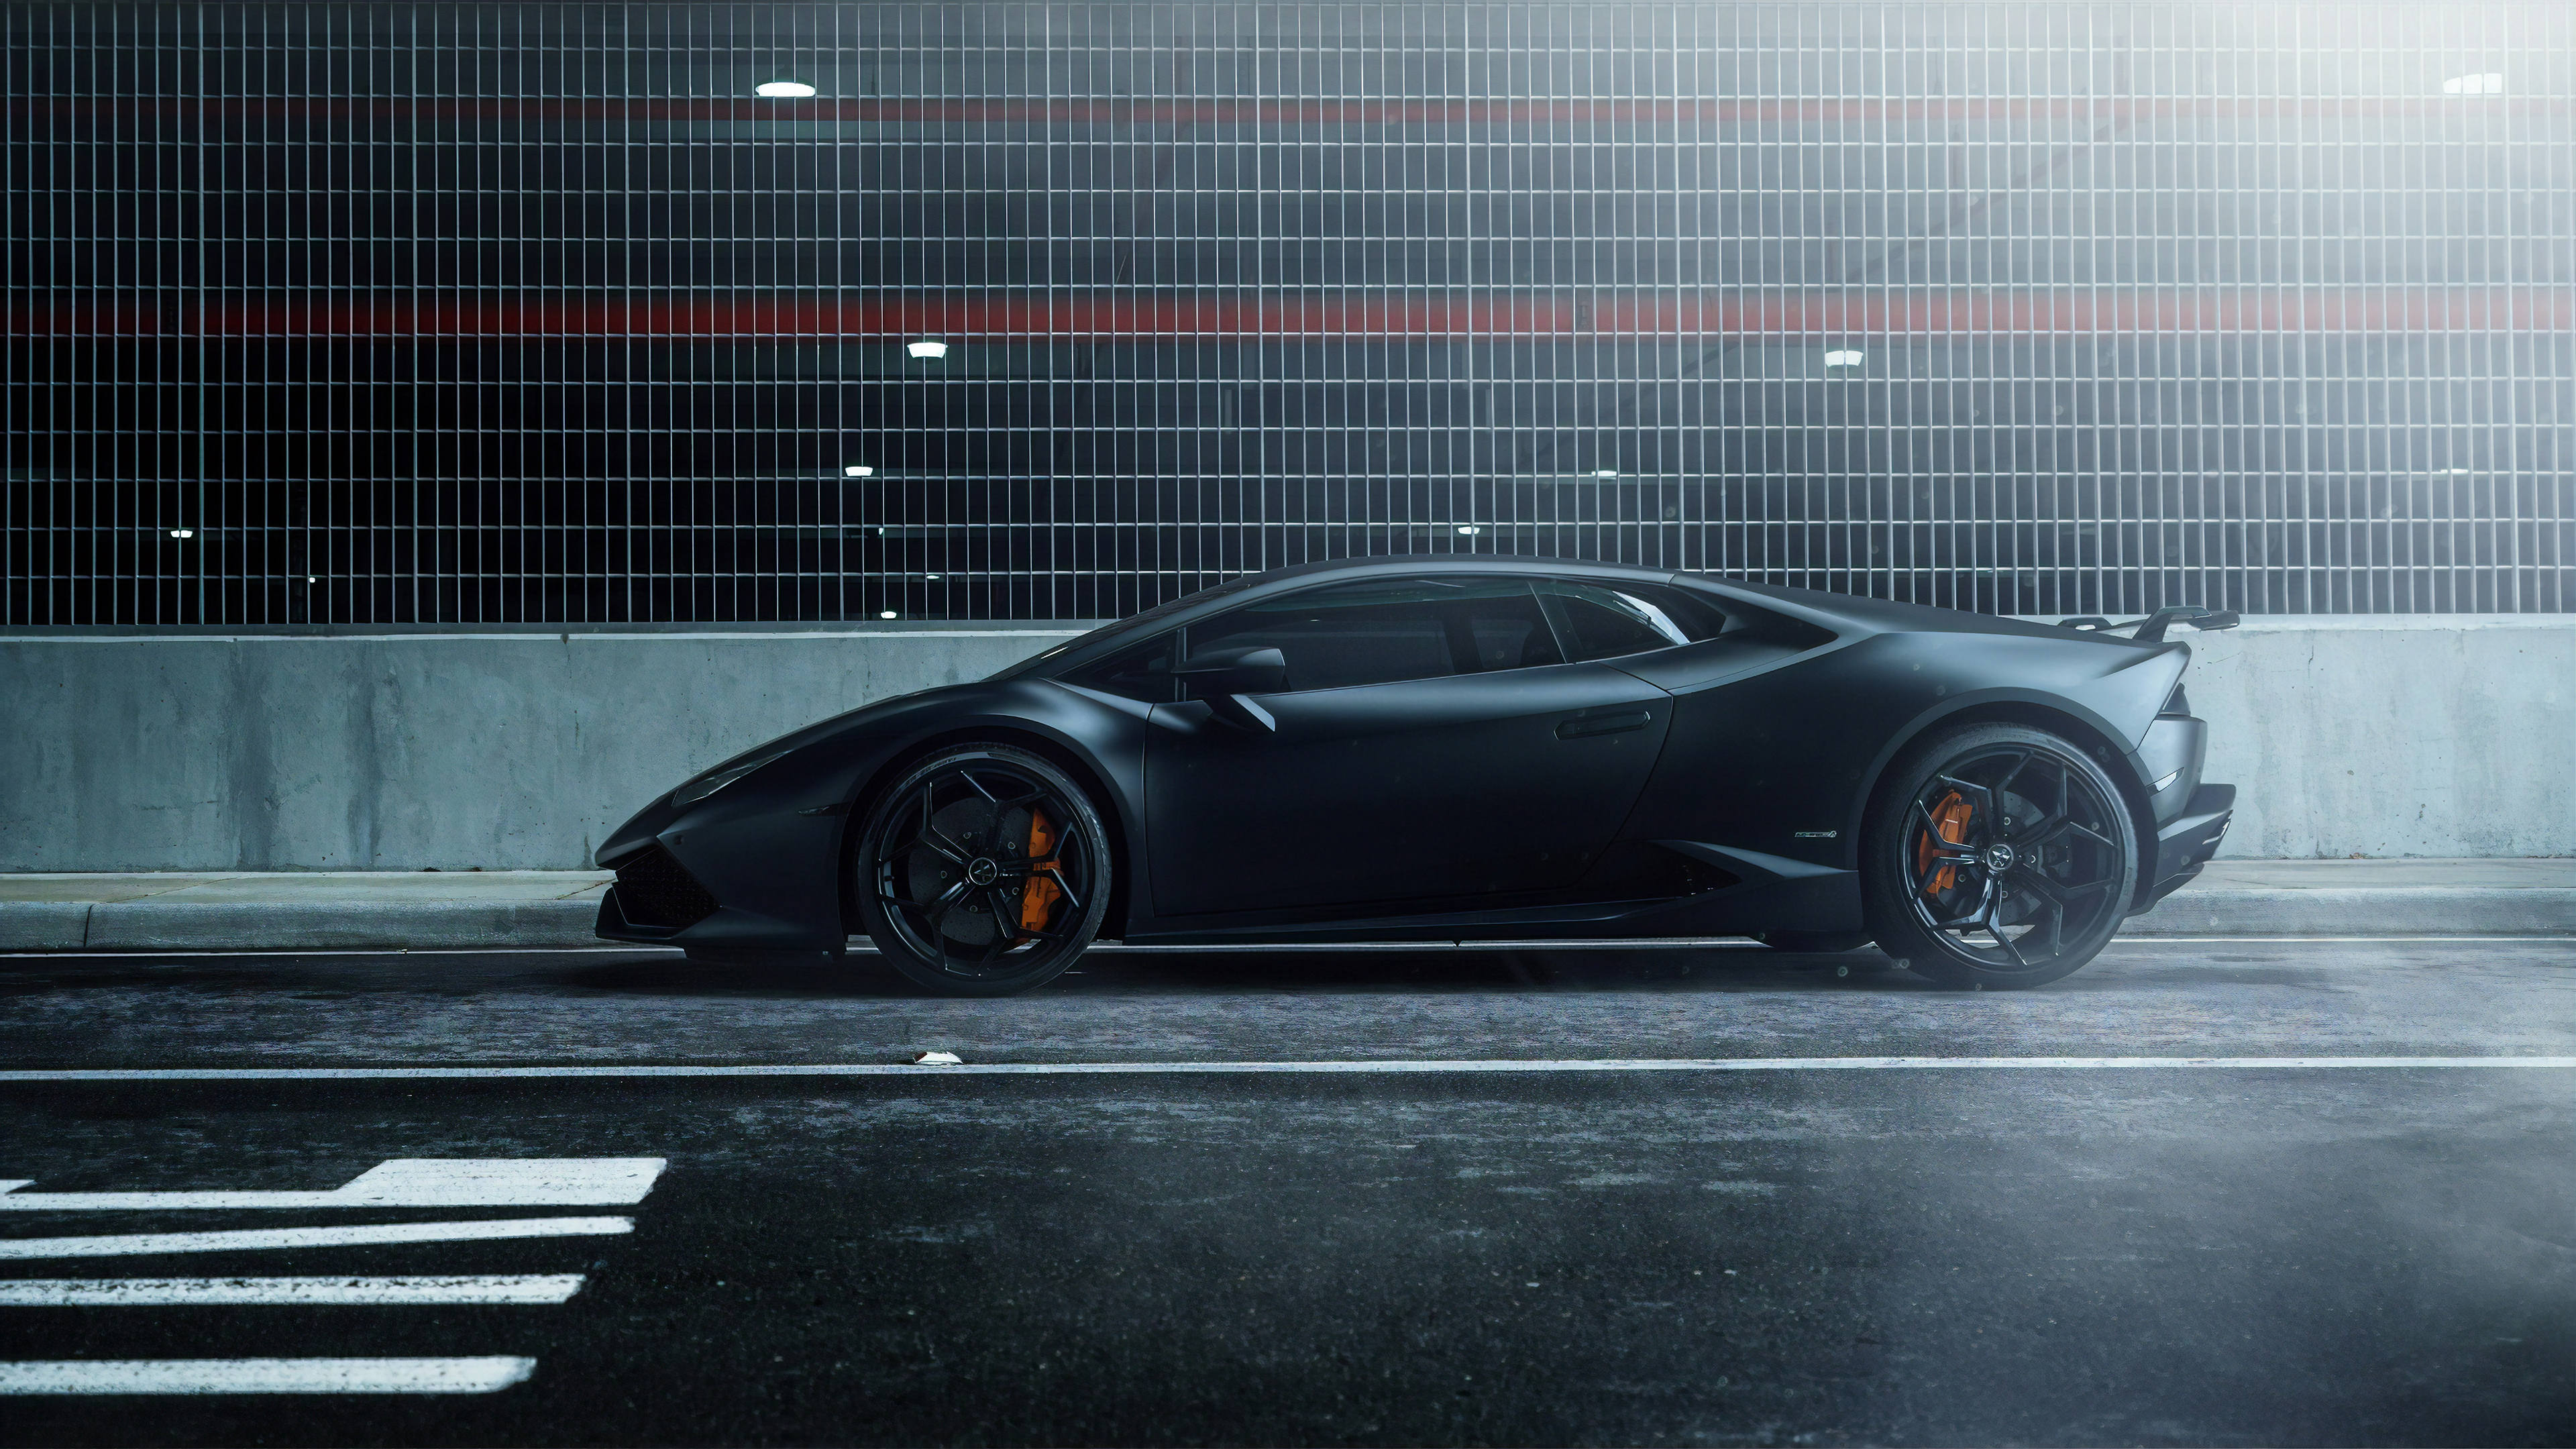 Baixe gratuitamente a imagem Lamborghini Huracán, Lamborghini, Veículos na área de trabalho do seu PC